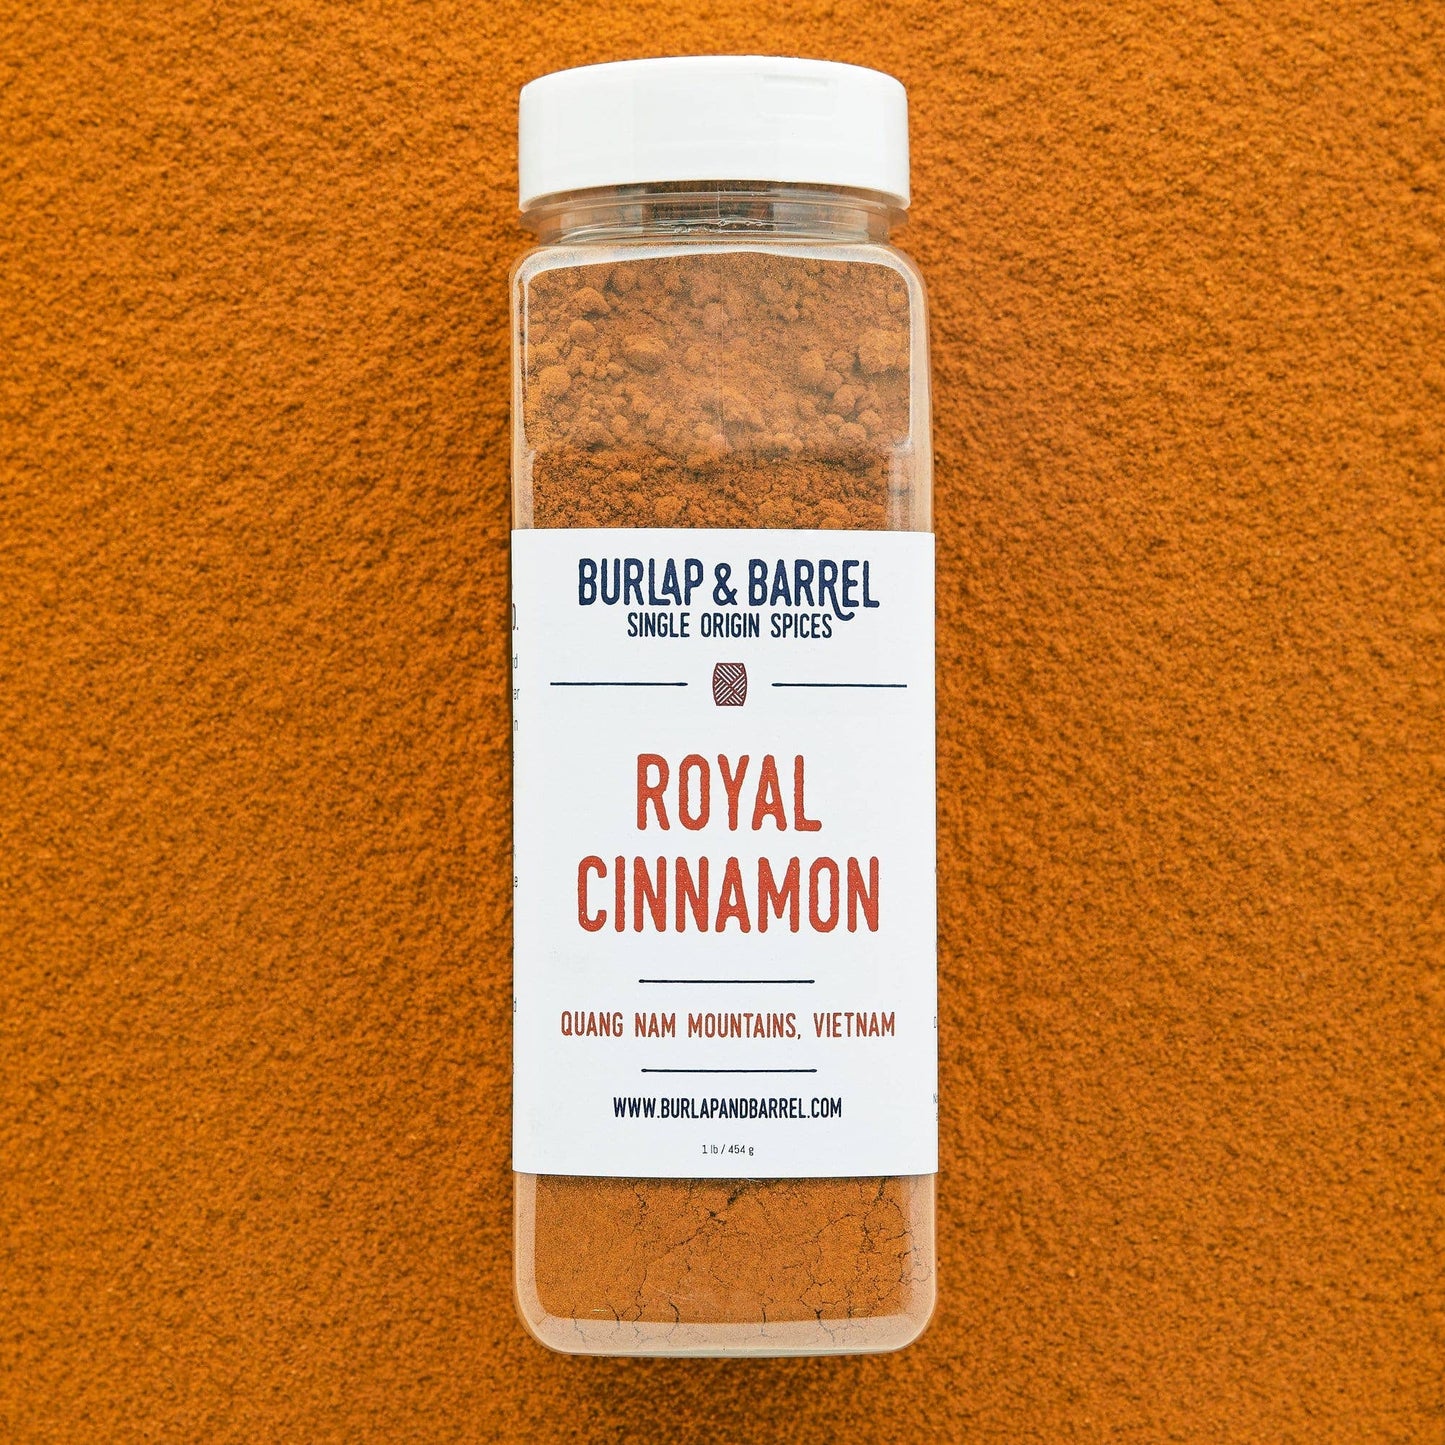 Burlap & Barrel - Royal Cinnamon (Saigon cinnamon, Vietnamese cinnamon) Spice: 1.8 oz glass jar